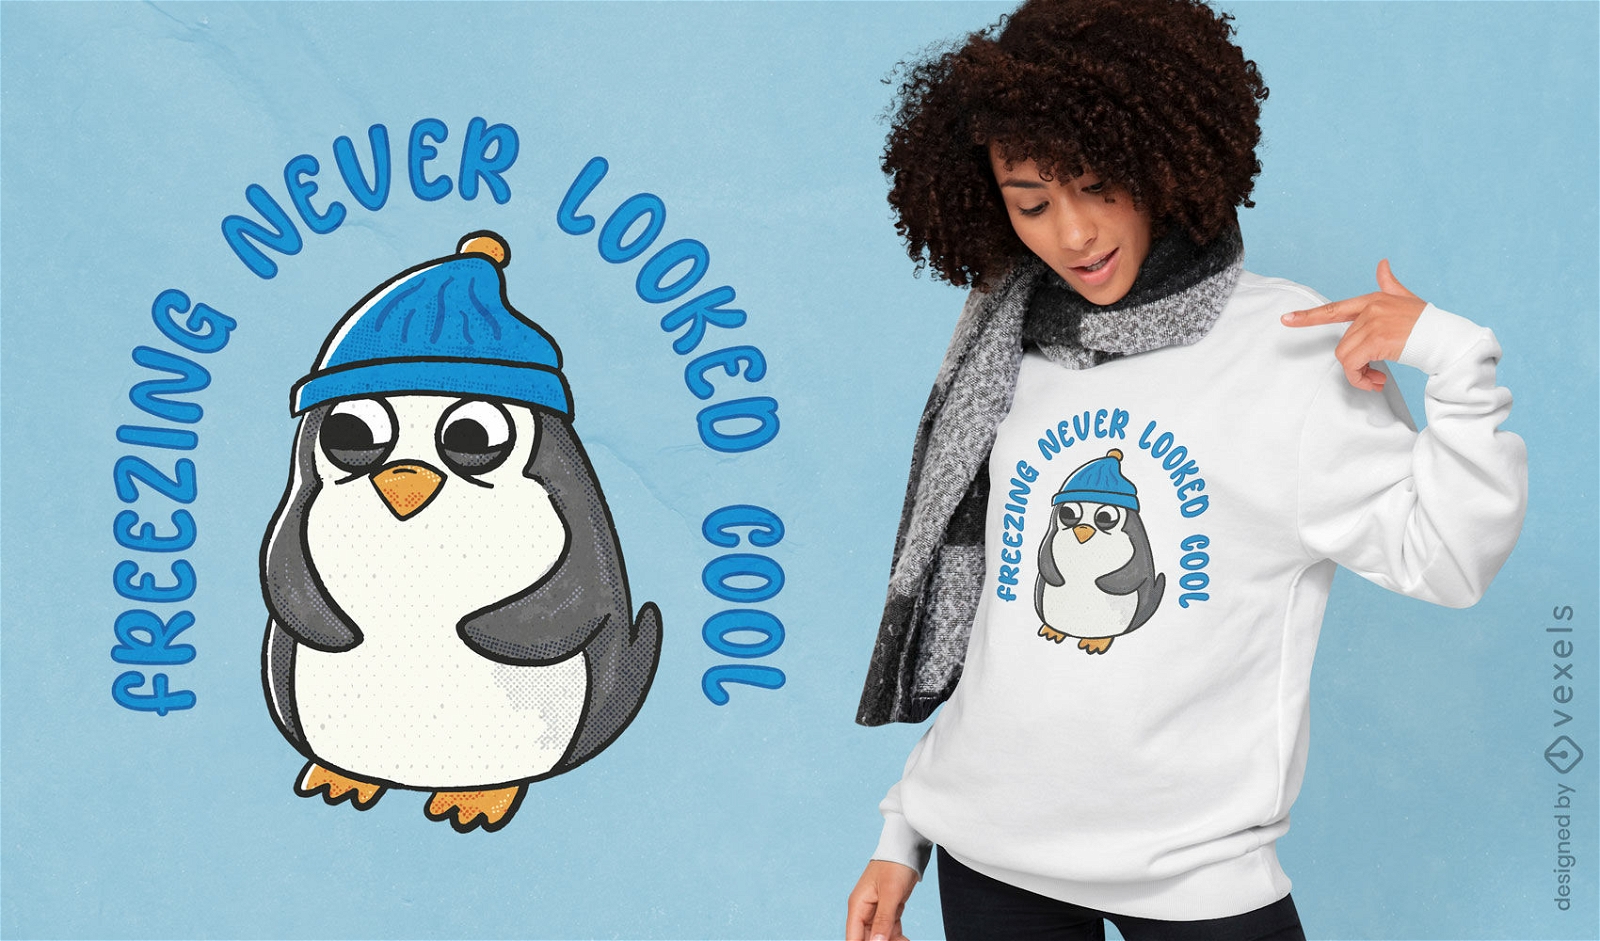 Cool penguin t-shirt design